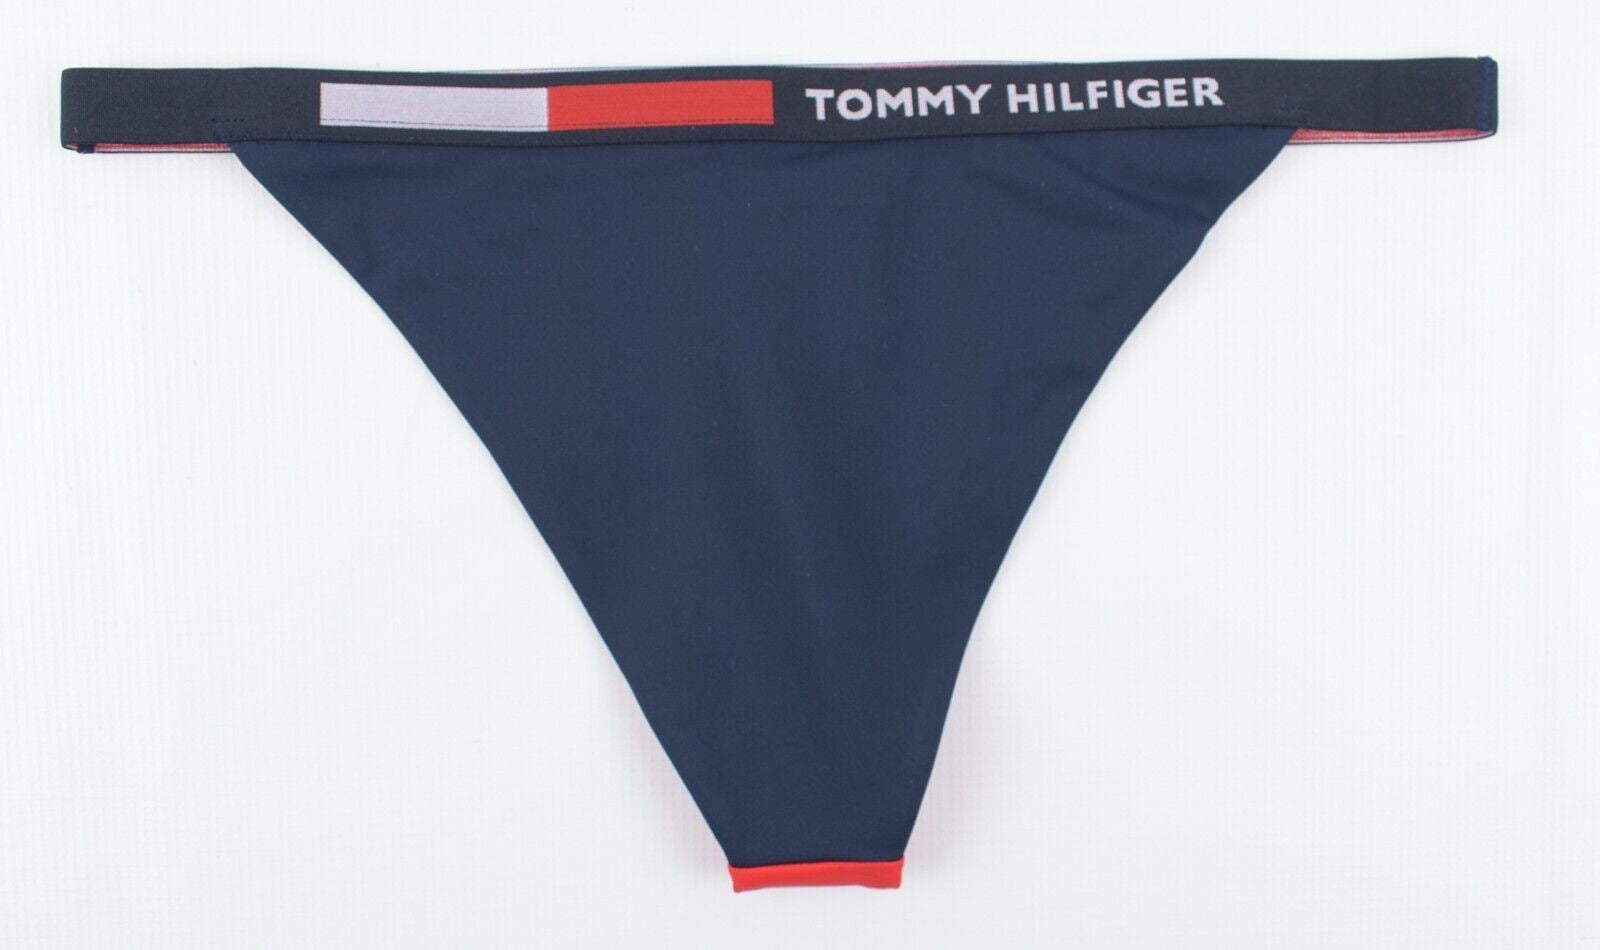 TOMMY HILFIGER Swimwear: Women's Bikini Bottoms, Blue/Red, size M (UK 12)